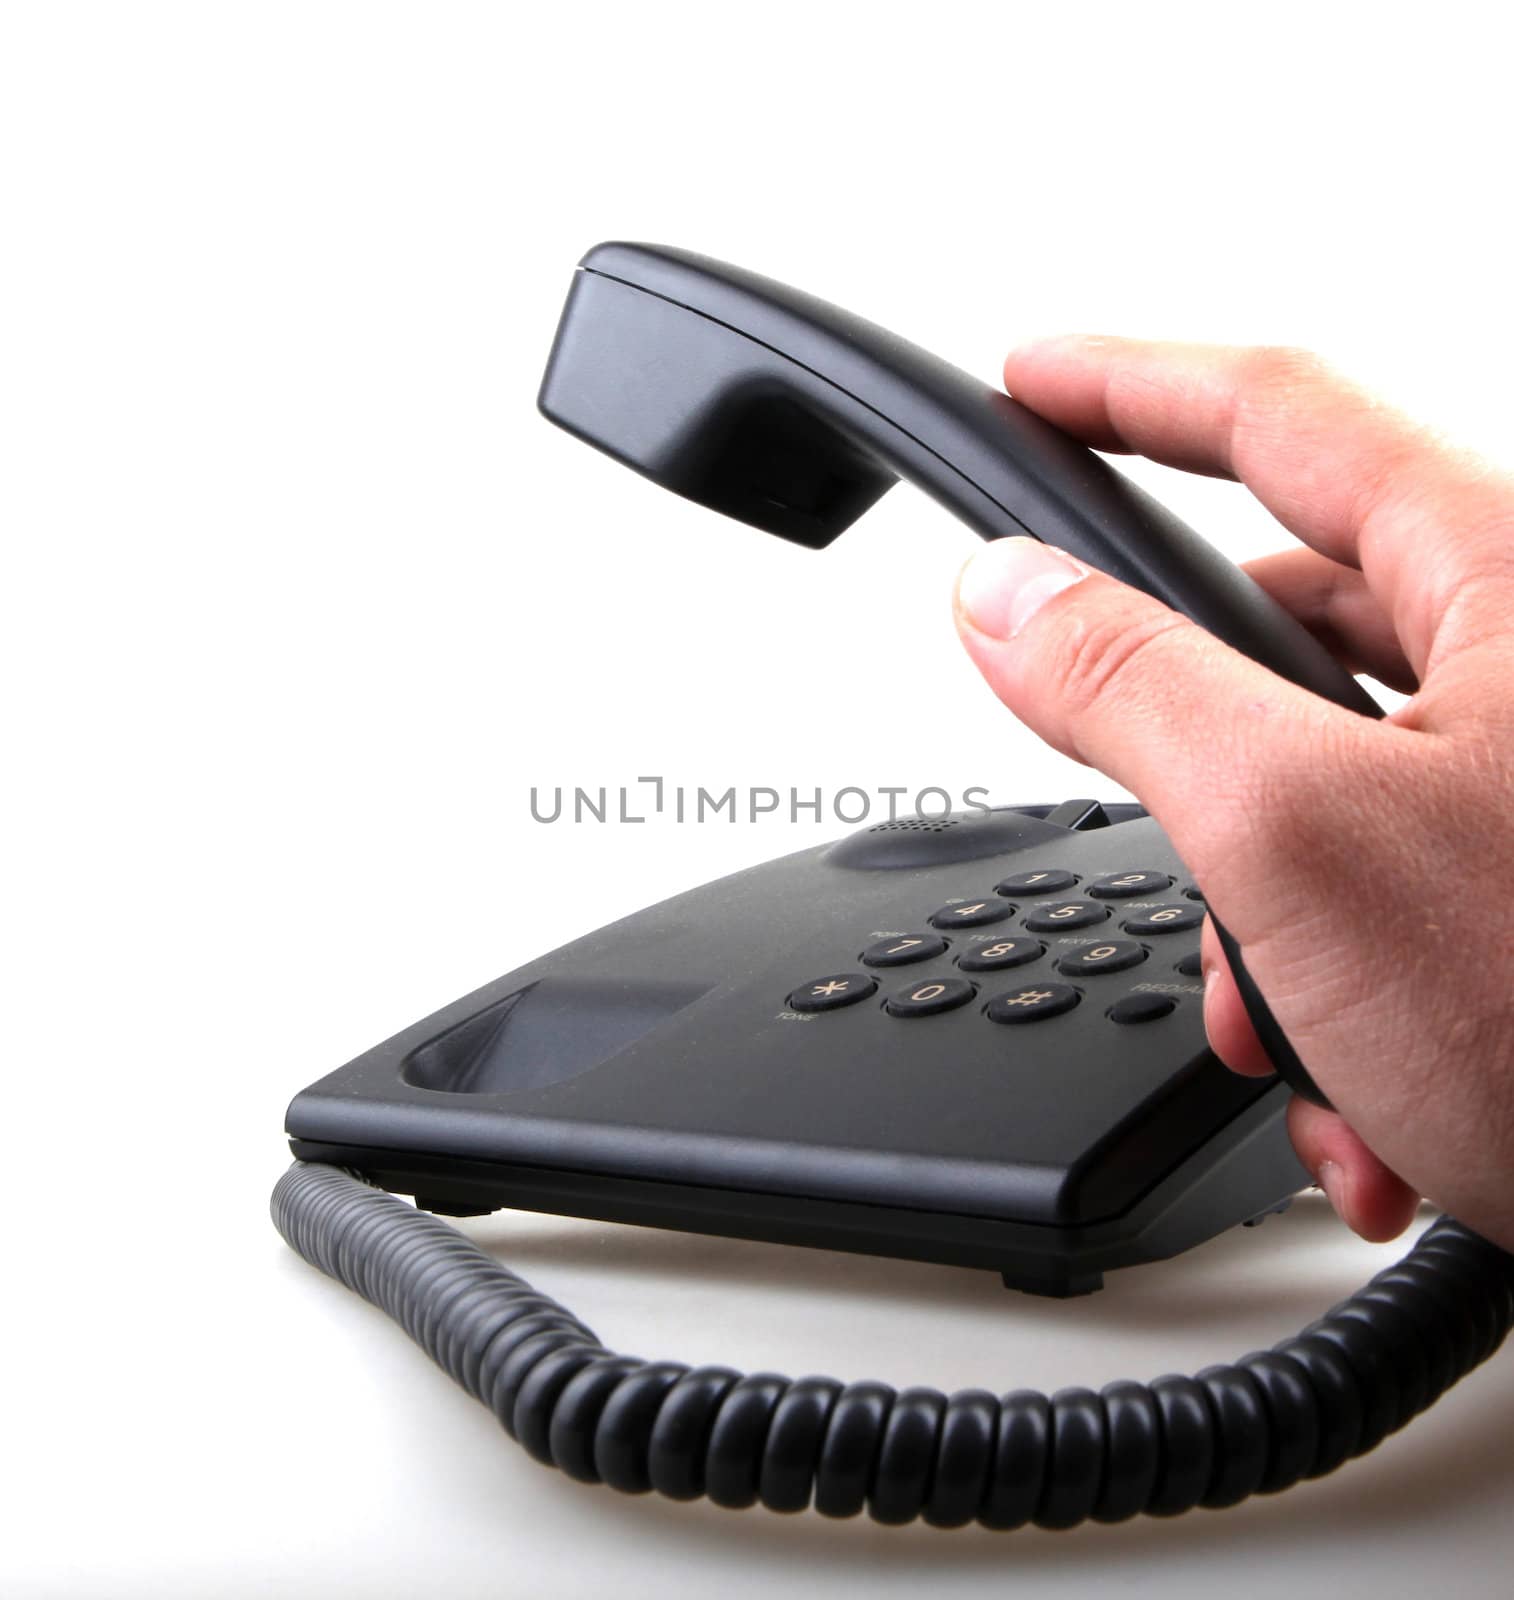 telephone isolated over white background.